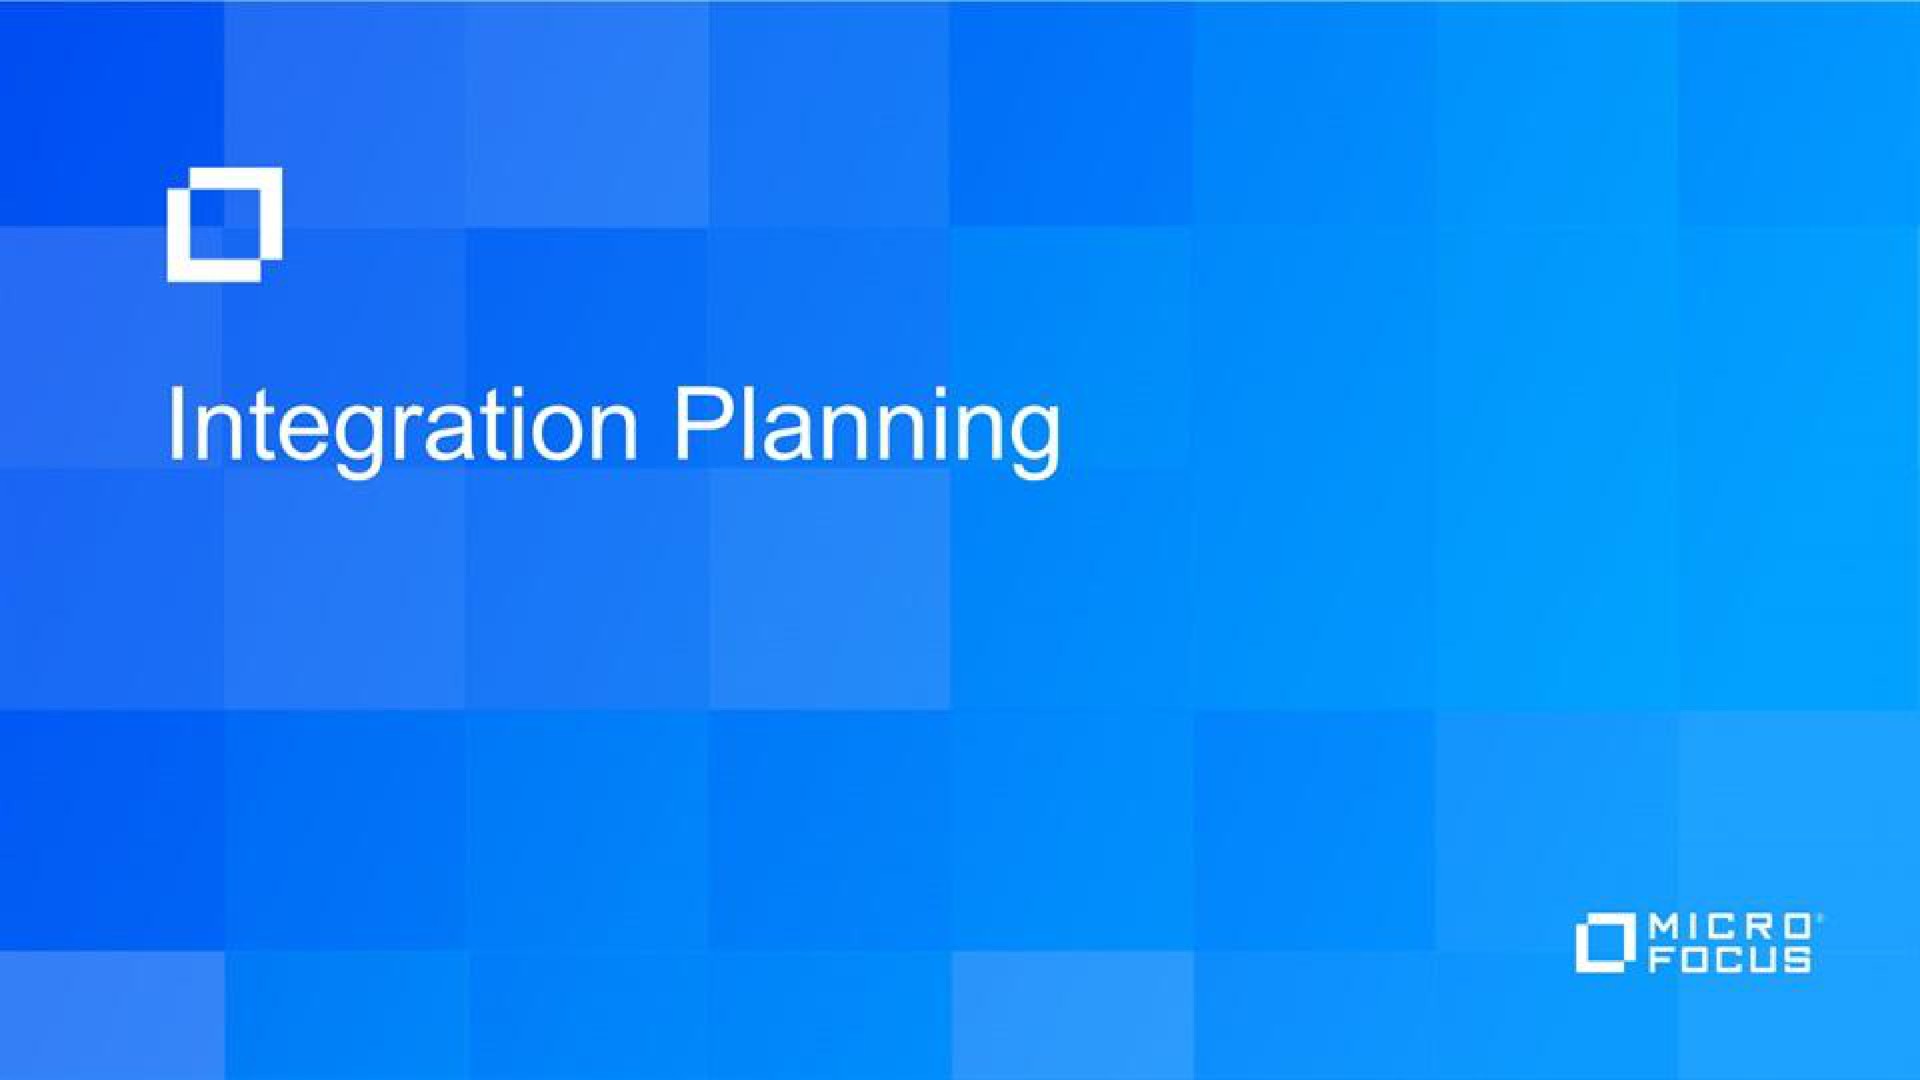 i integration planning | Micro Focus